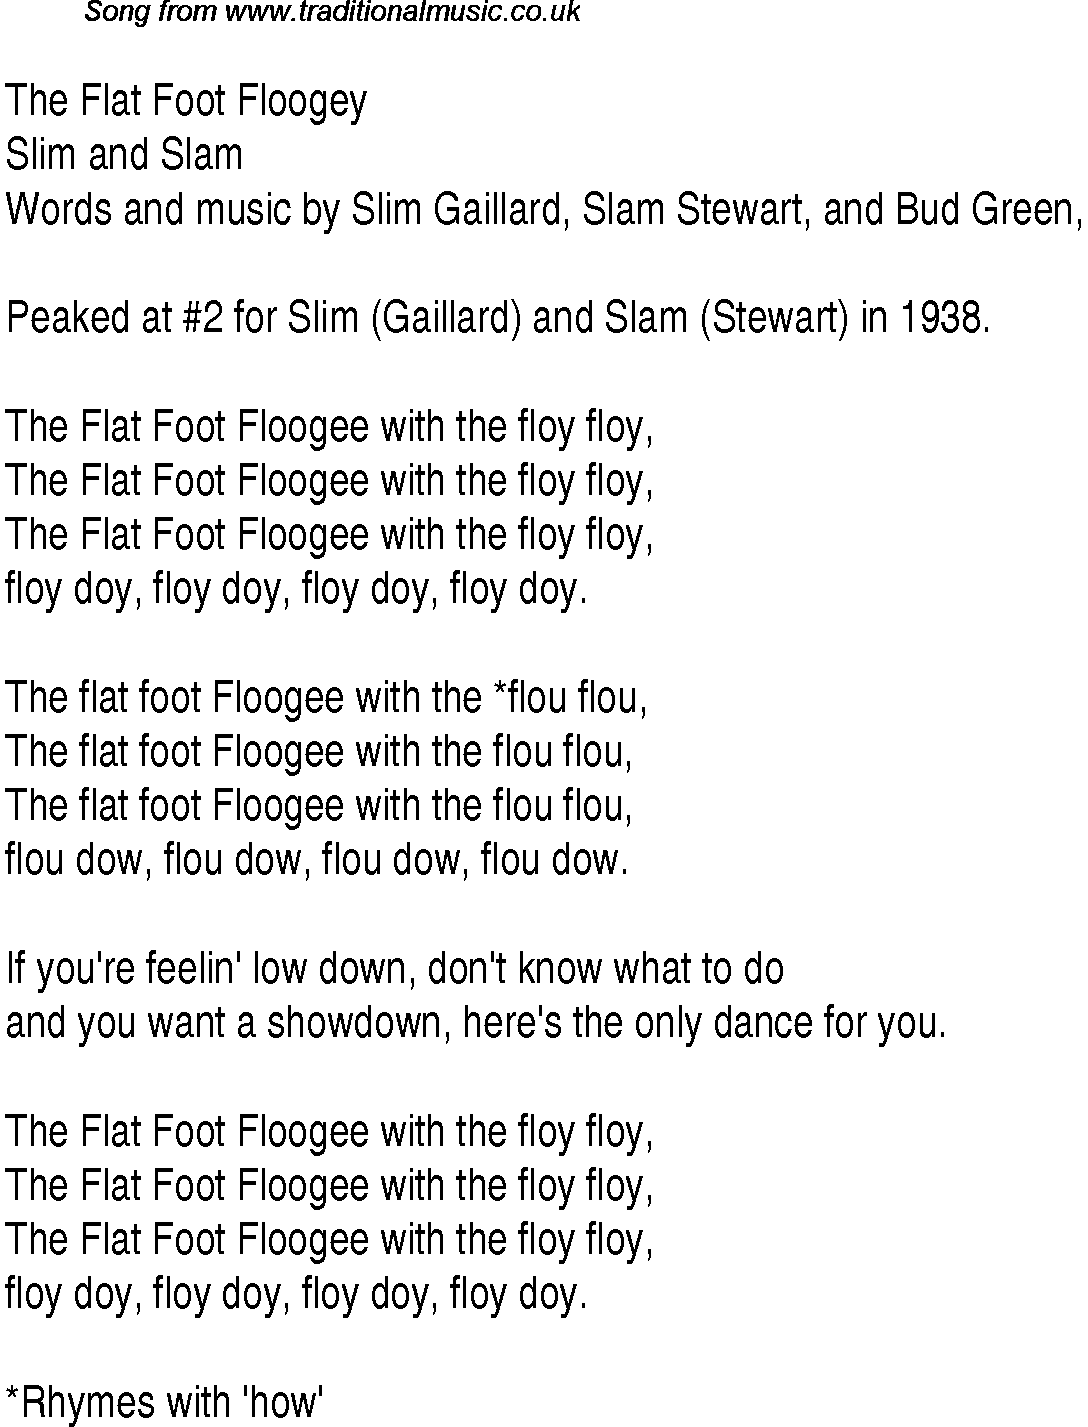 Music charts top songs 1938 - lyrics for Flat Foot Floogey